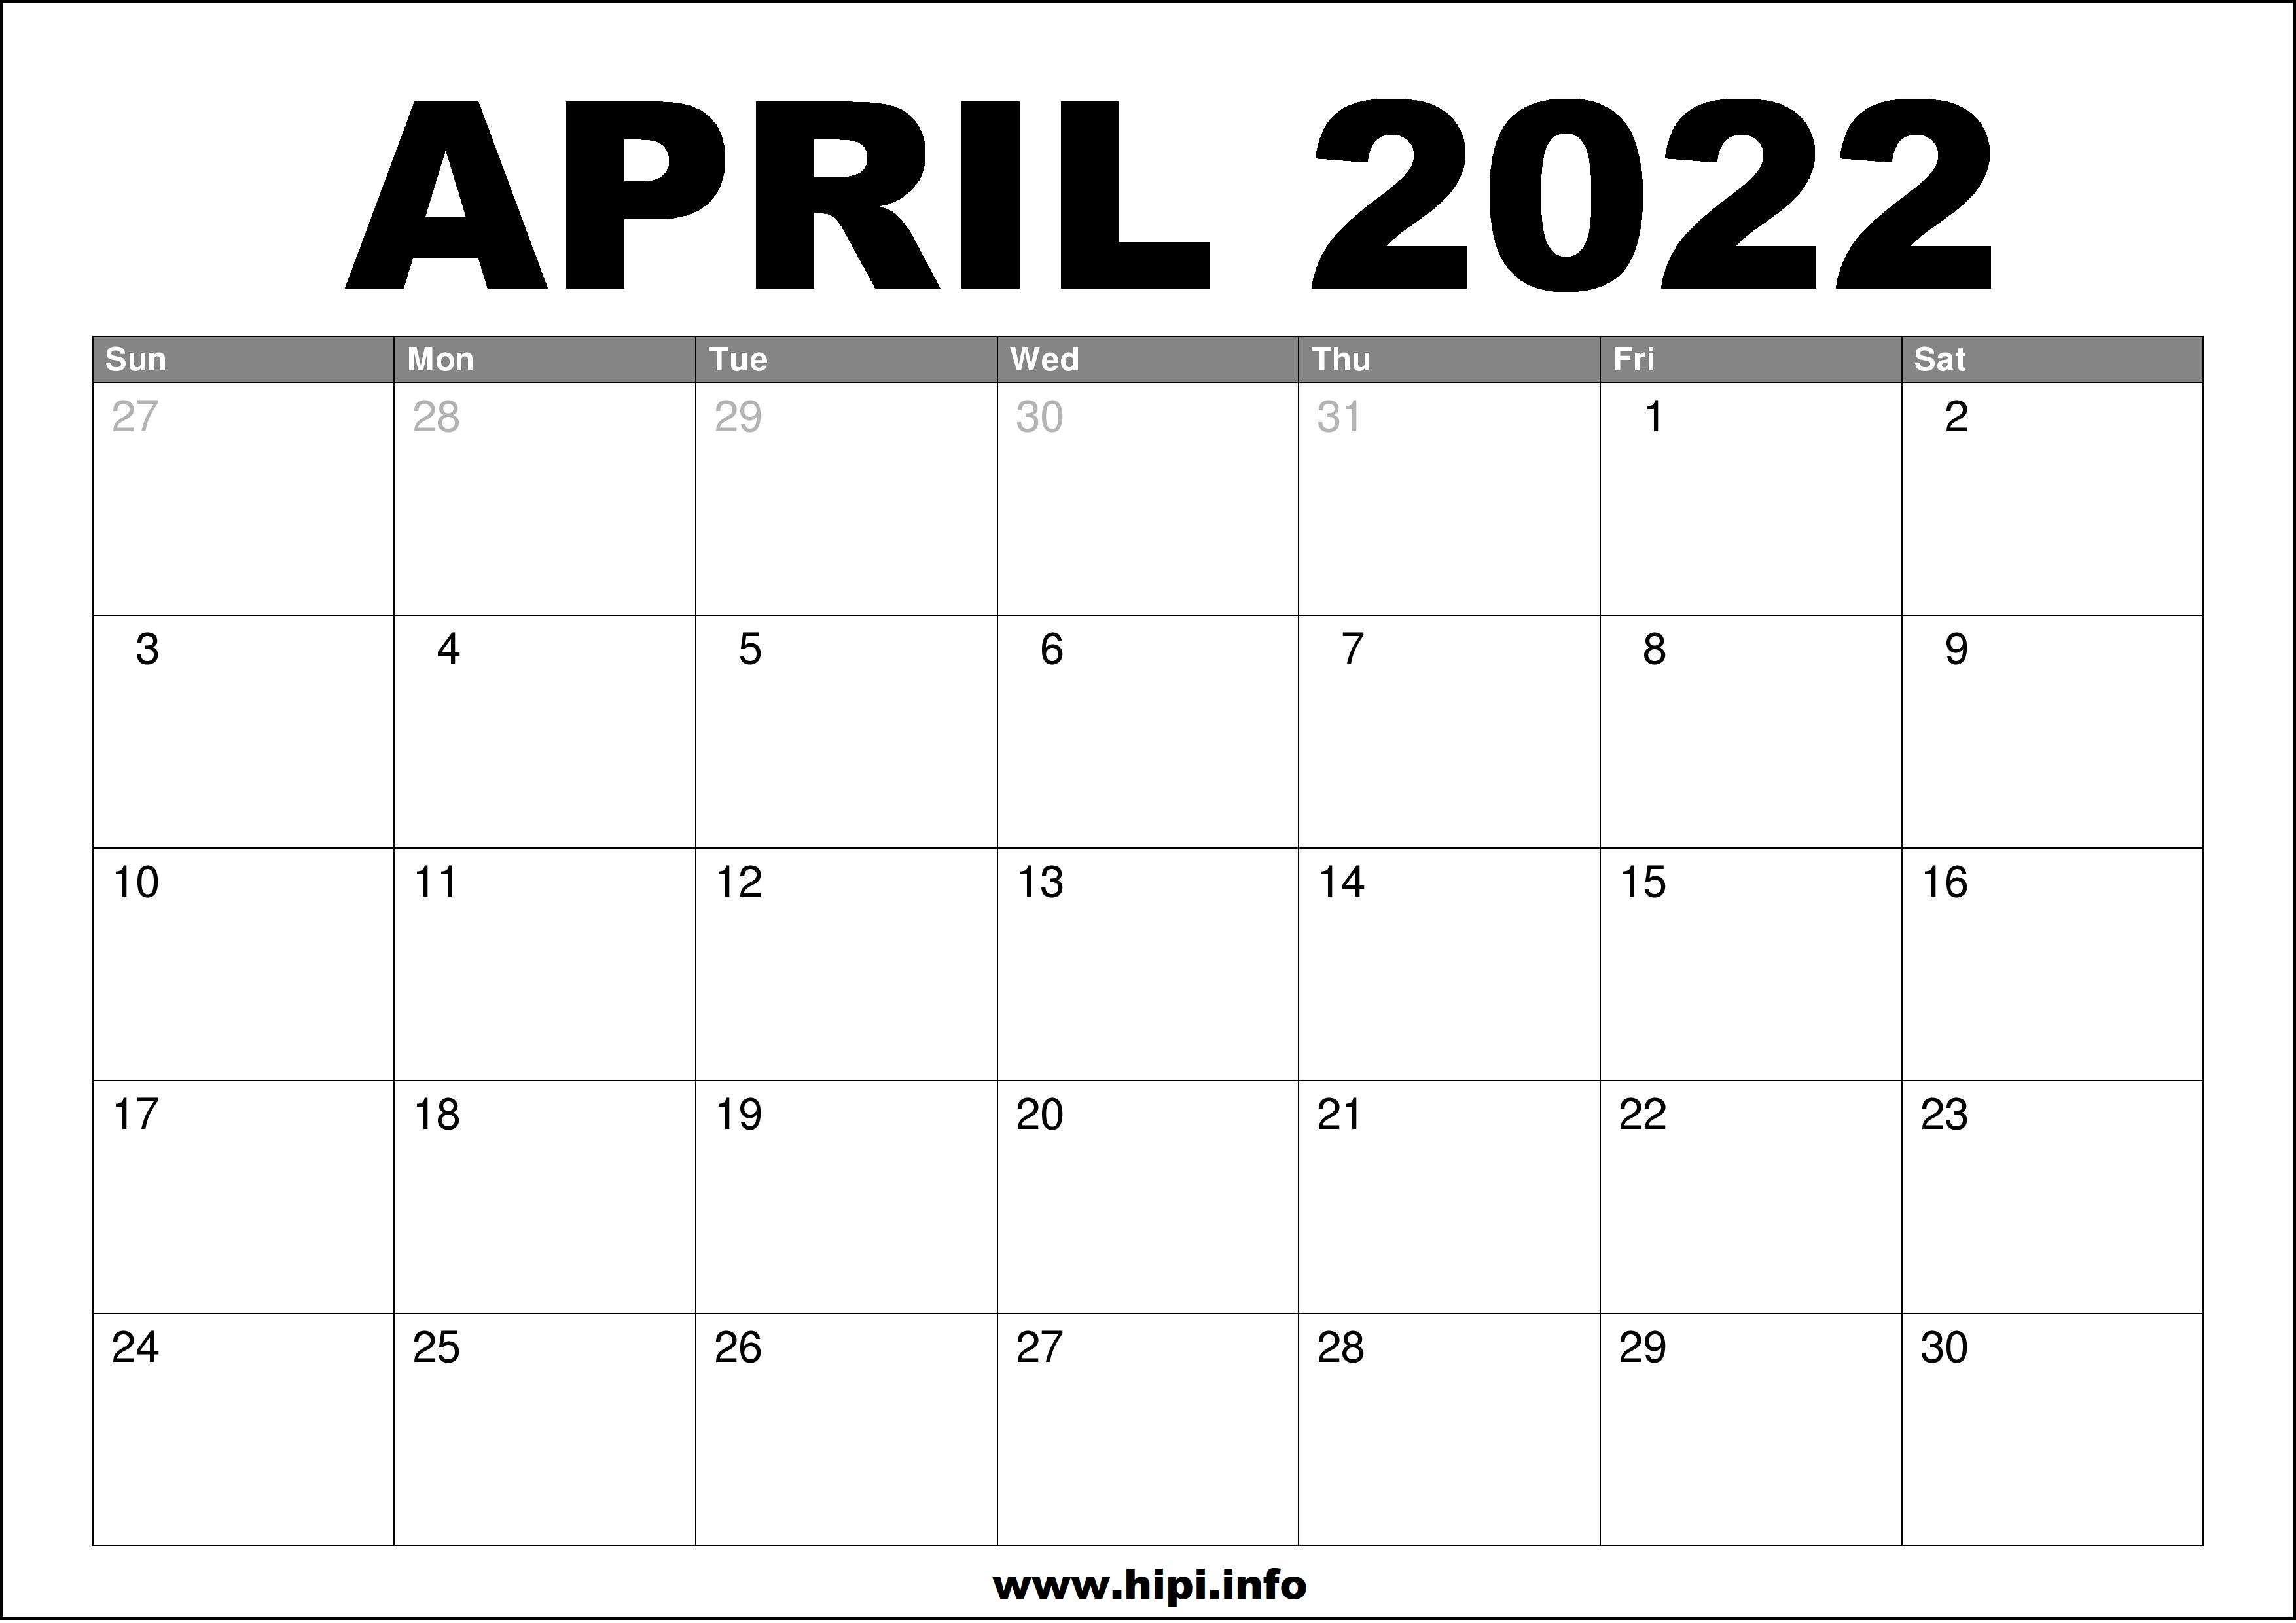 Free Printable Calendar April 2022 April 2022 Calendar Printable Free - Hipi.info | Calendars Printable Free